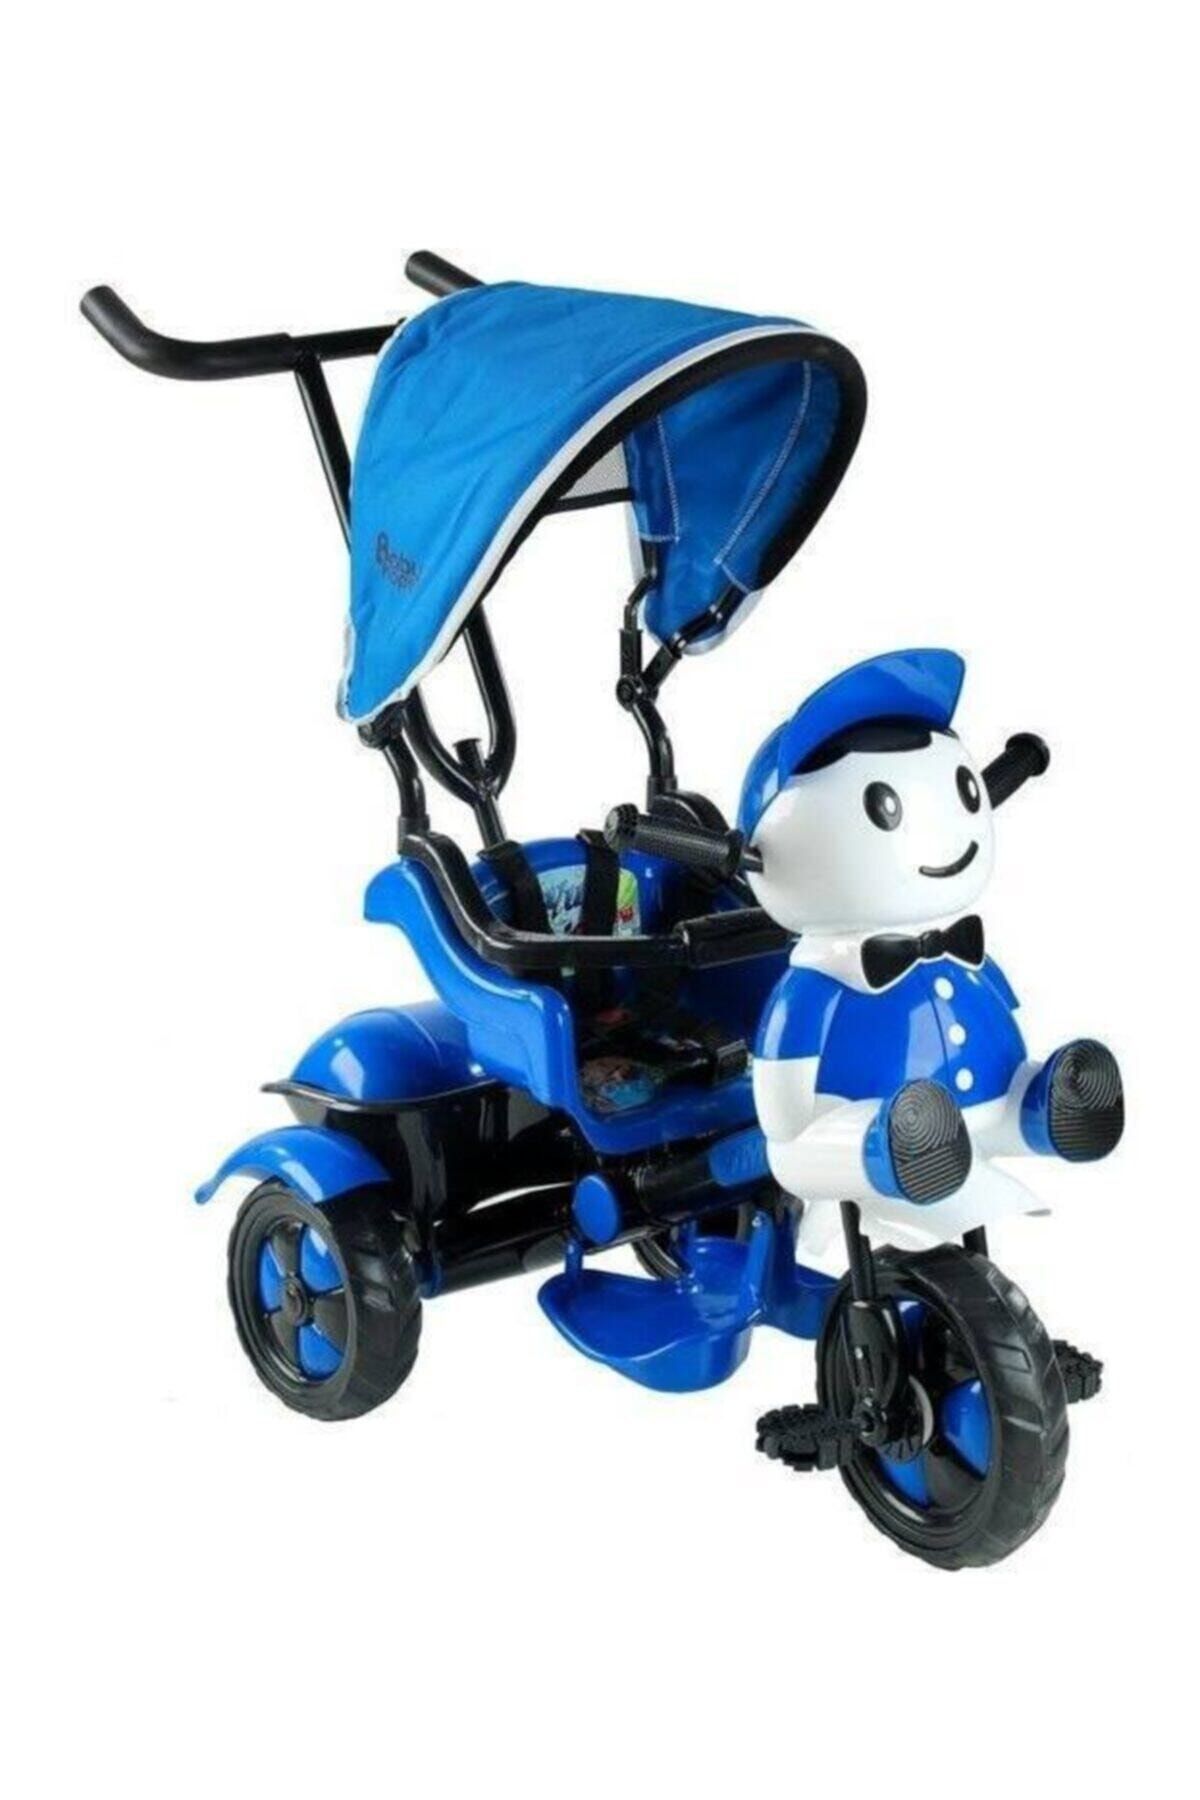 Ümit Mavi Babyhope Yupi Triycle Üç Tekerlekli Bisiklet